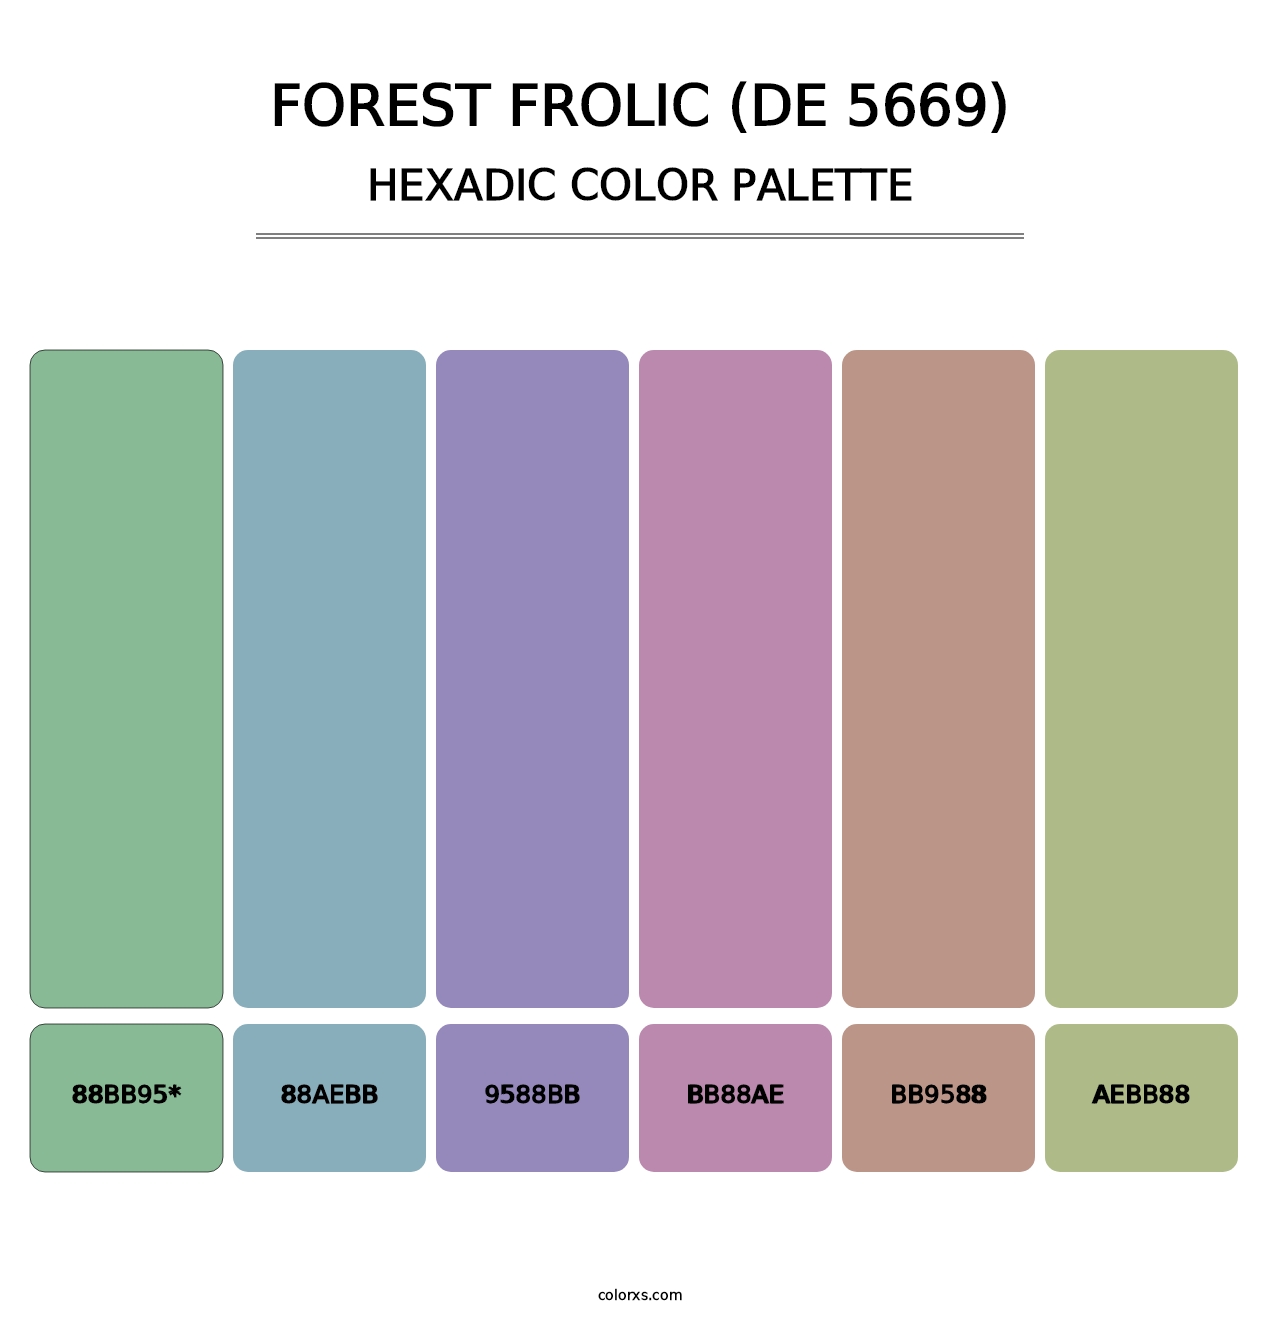 Forest Frolic (DE 5669) - Hexadic Color Palette